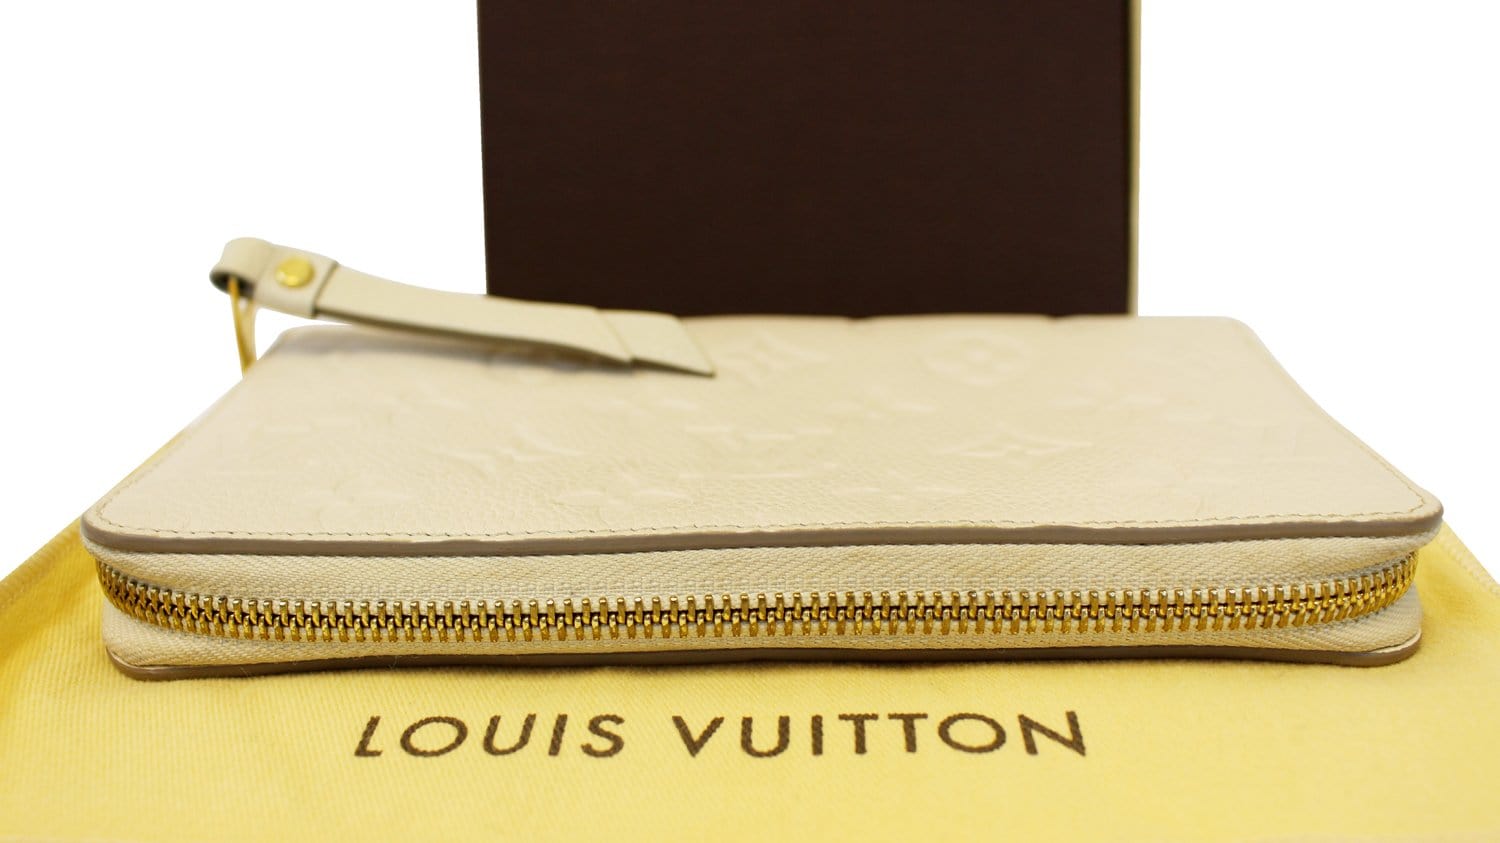 LOUIS VUITTON Empreinte Portefeuille Secret Wallet White - 15% OFF